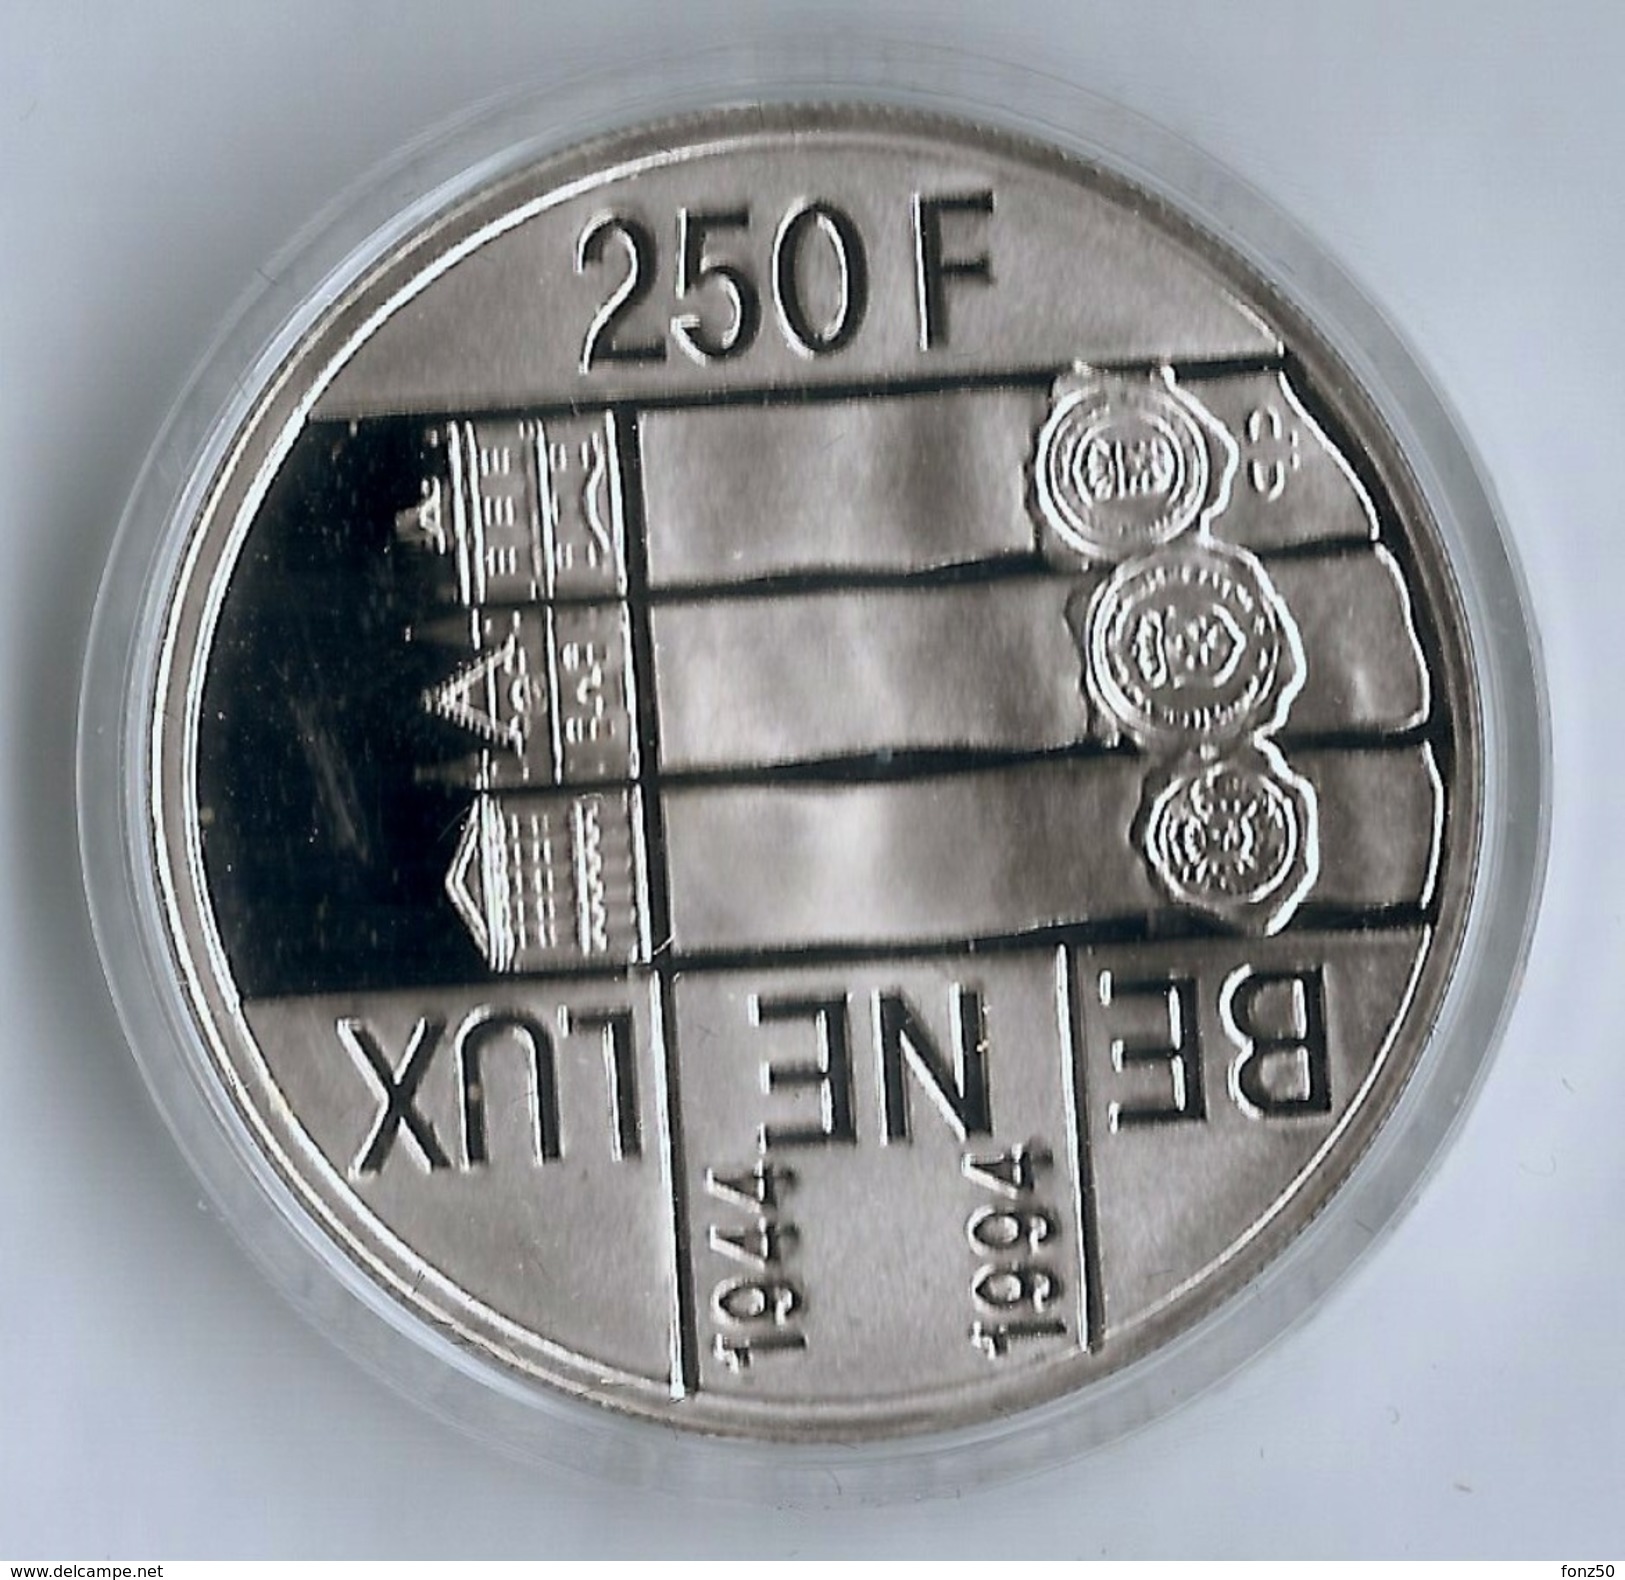 250 Franc 1994   QP * LUXEMBURG Uit BE/NE/LUX Box * Nr 9288 - Luxemburgo